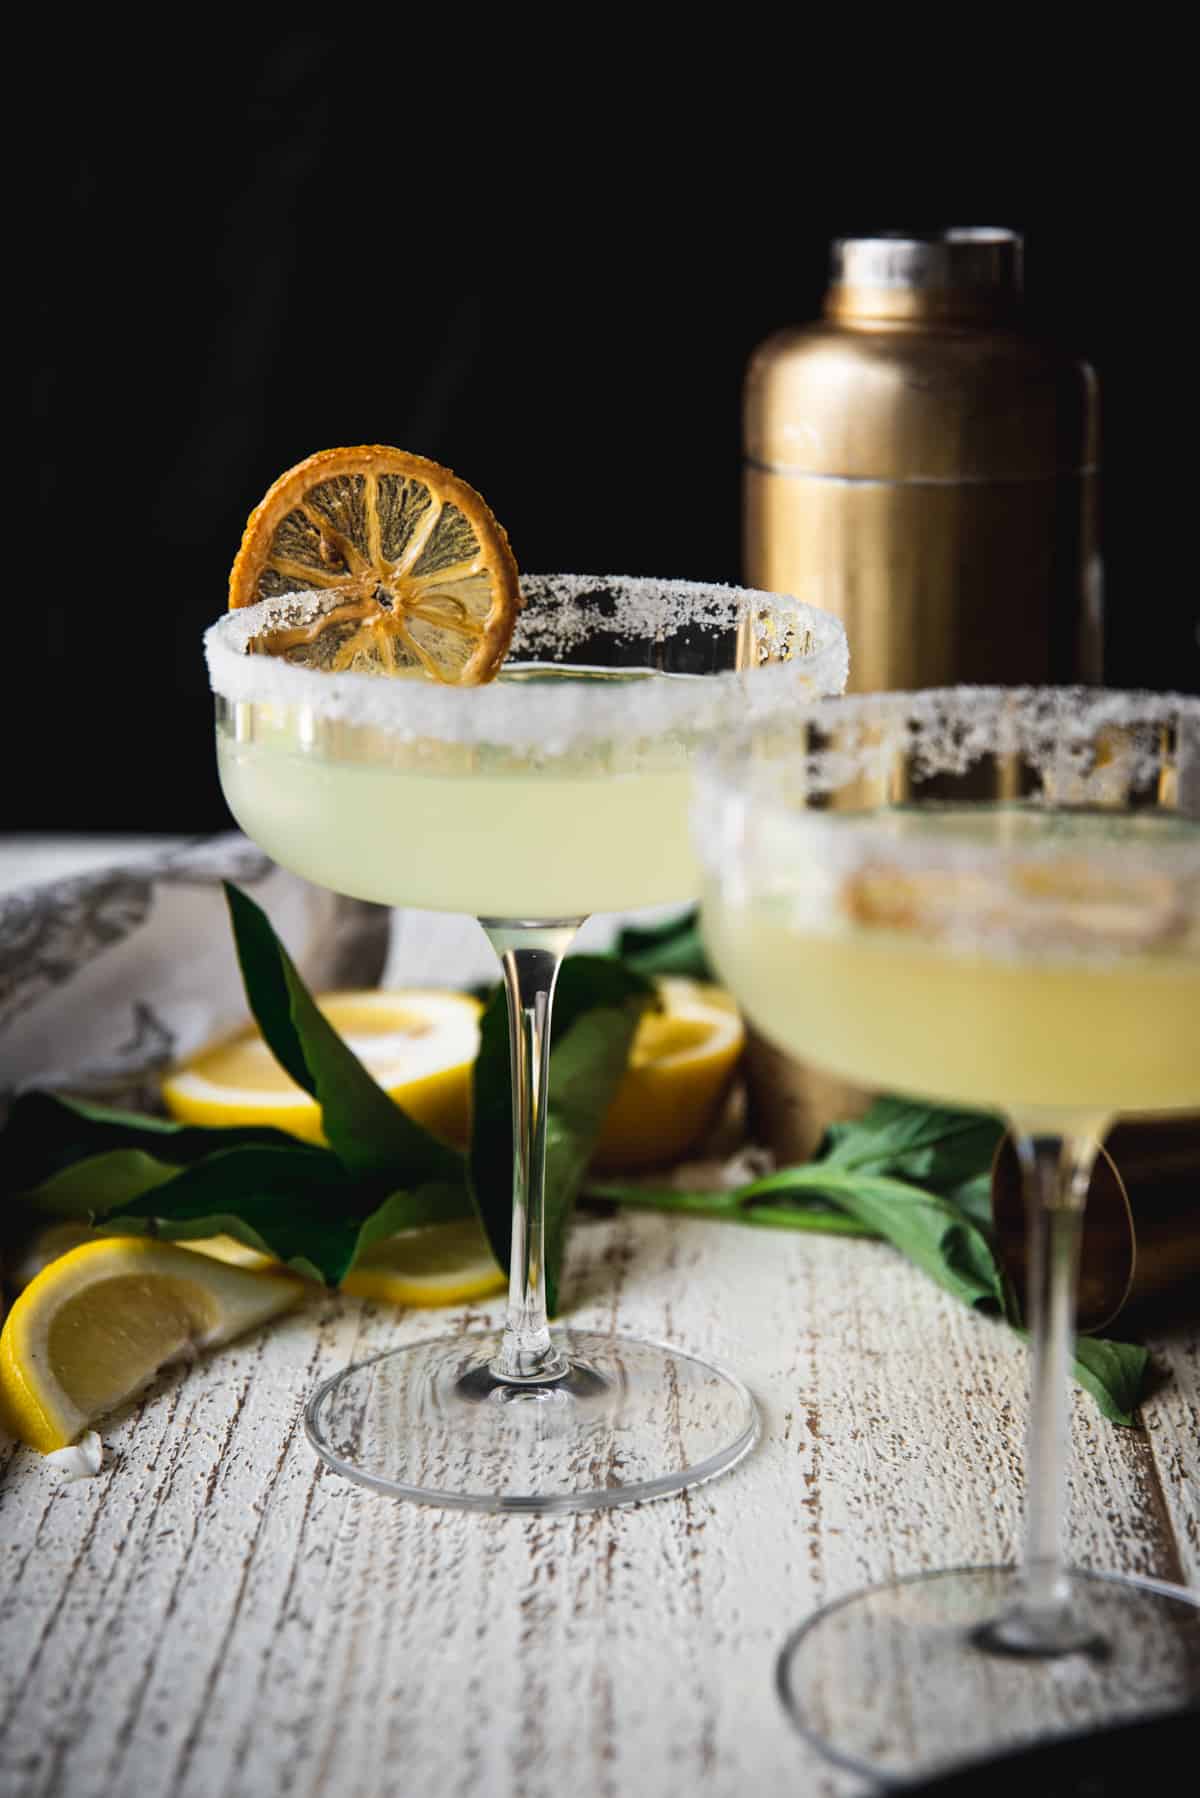 up close photo of lemon martini with a sugared lemon wheel